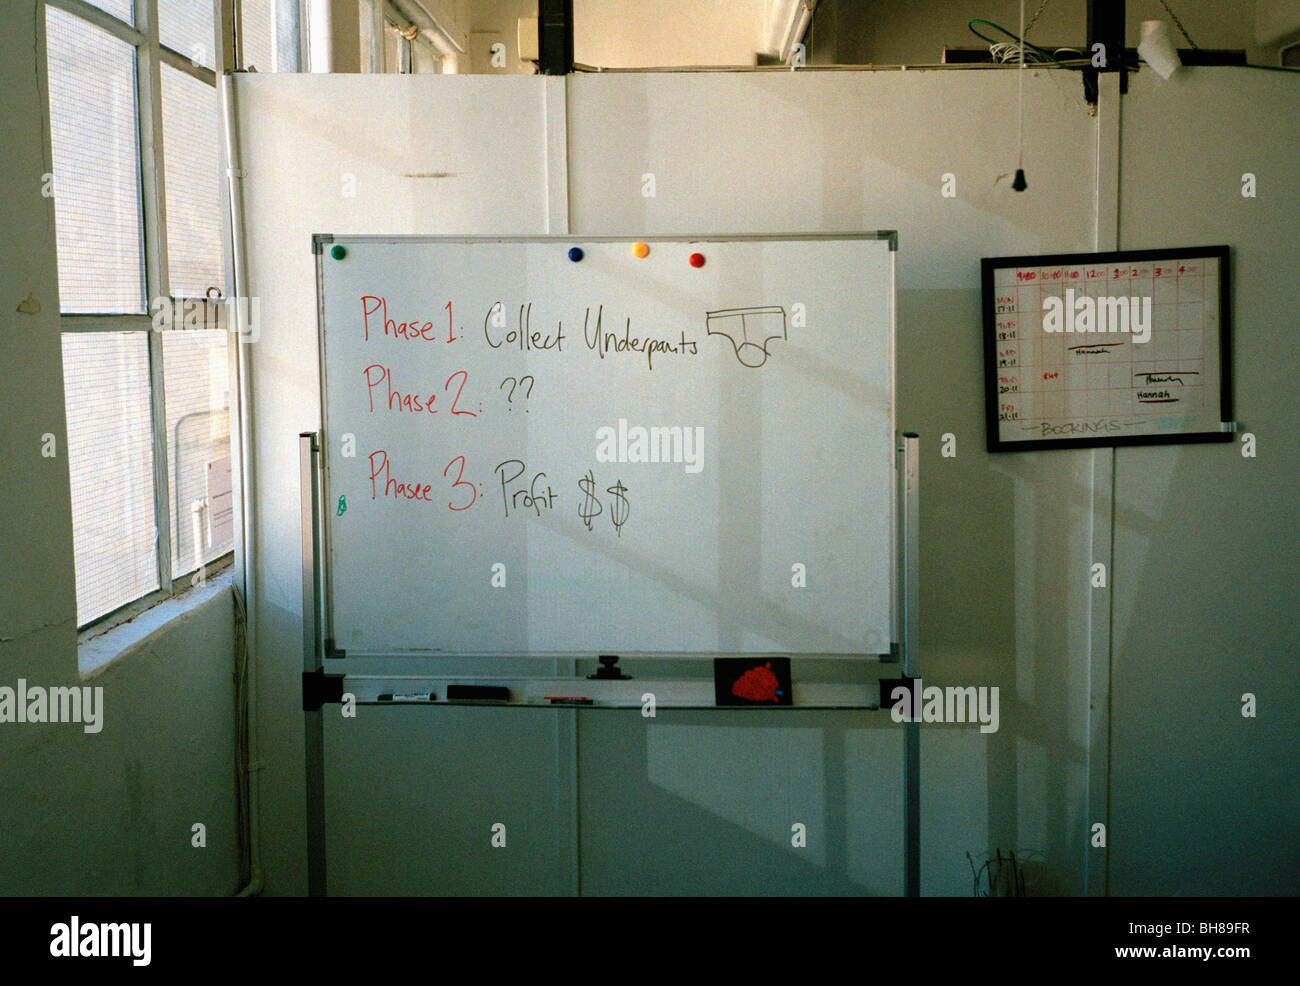 Business plan written on a whiteboard Stock Photo